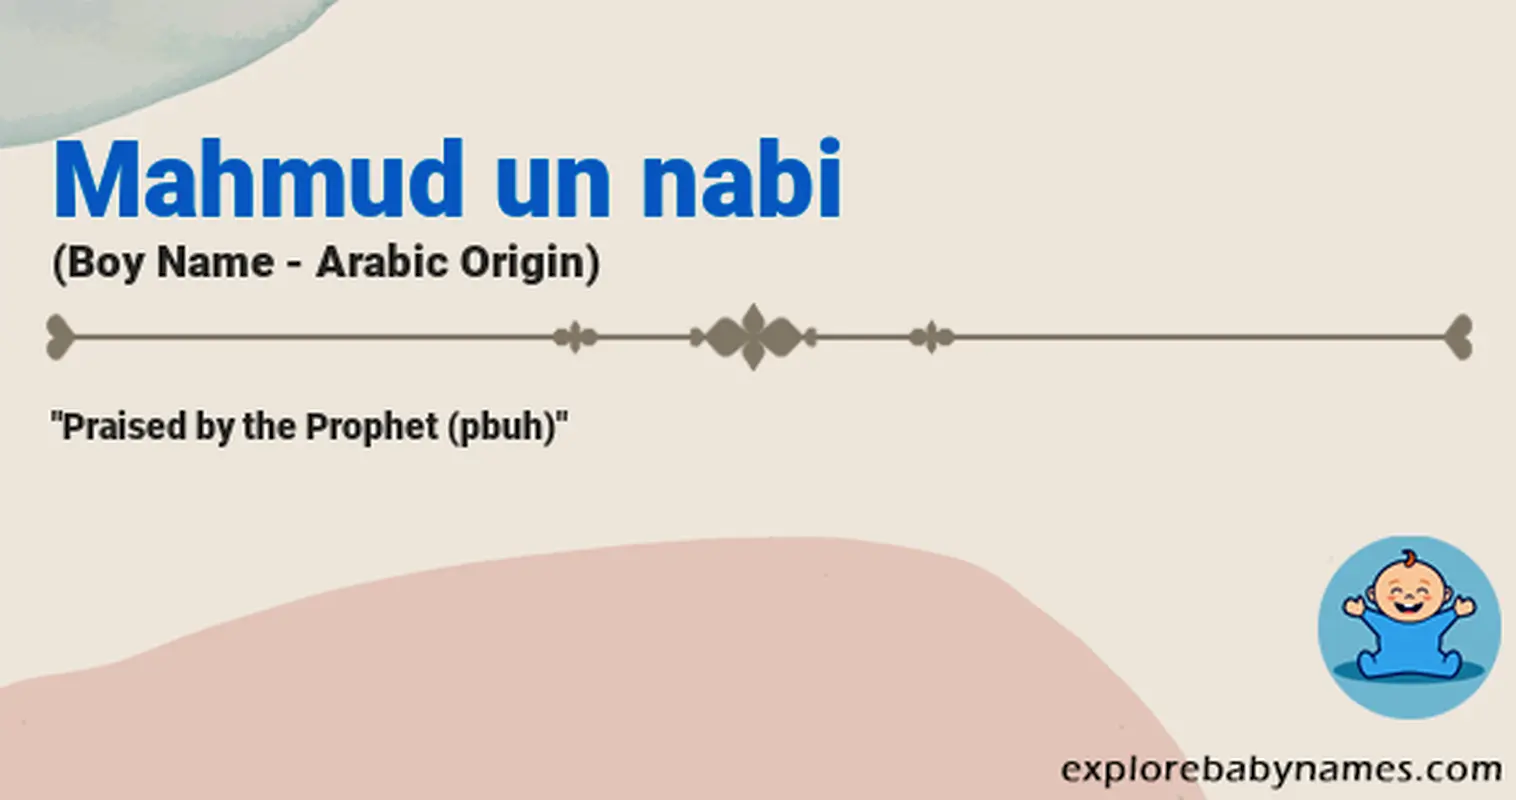 Meaning of Mahmud un nabi